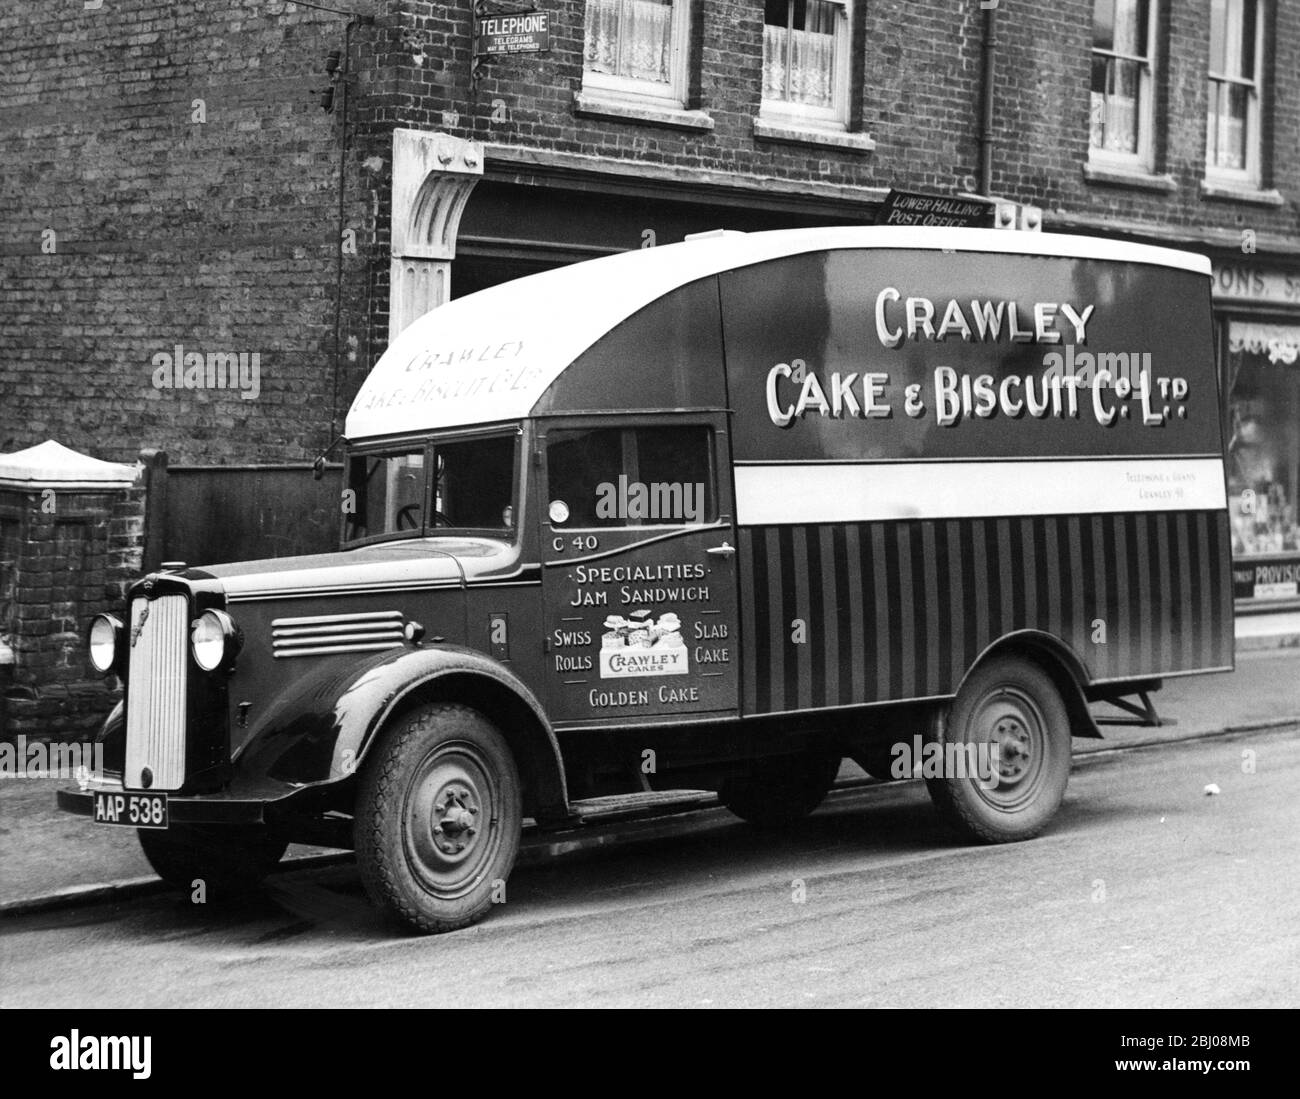 Lieferwagen Crawley Cake and Biscuit Co Ltd Stockfoto